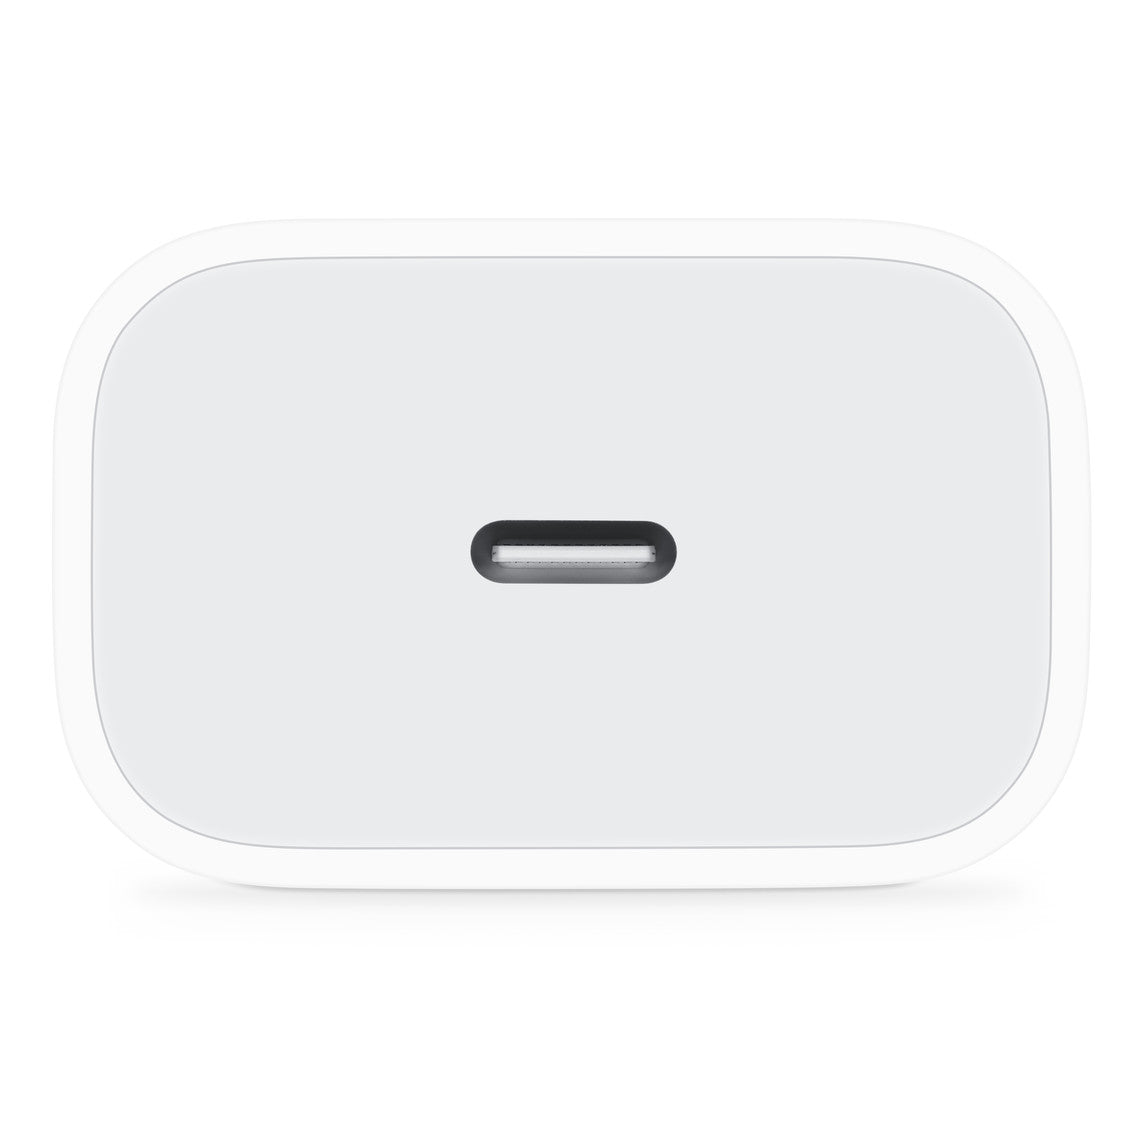 Apple 20W USB-C Power Adapter - Virbu Mobile